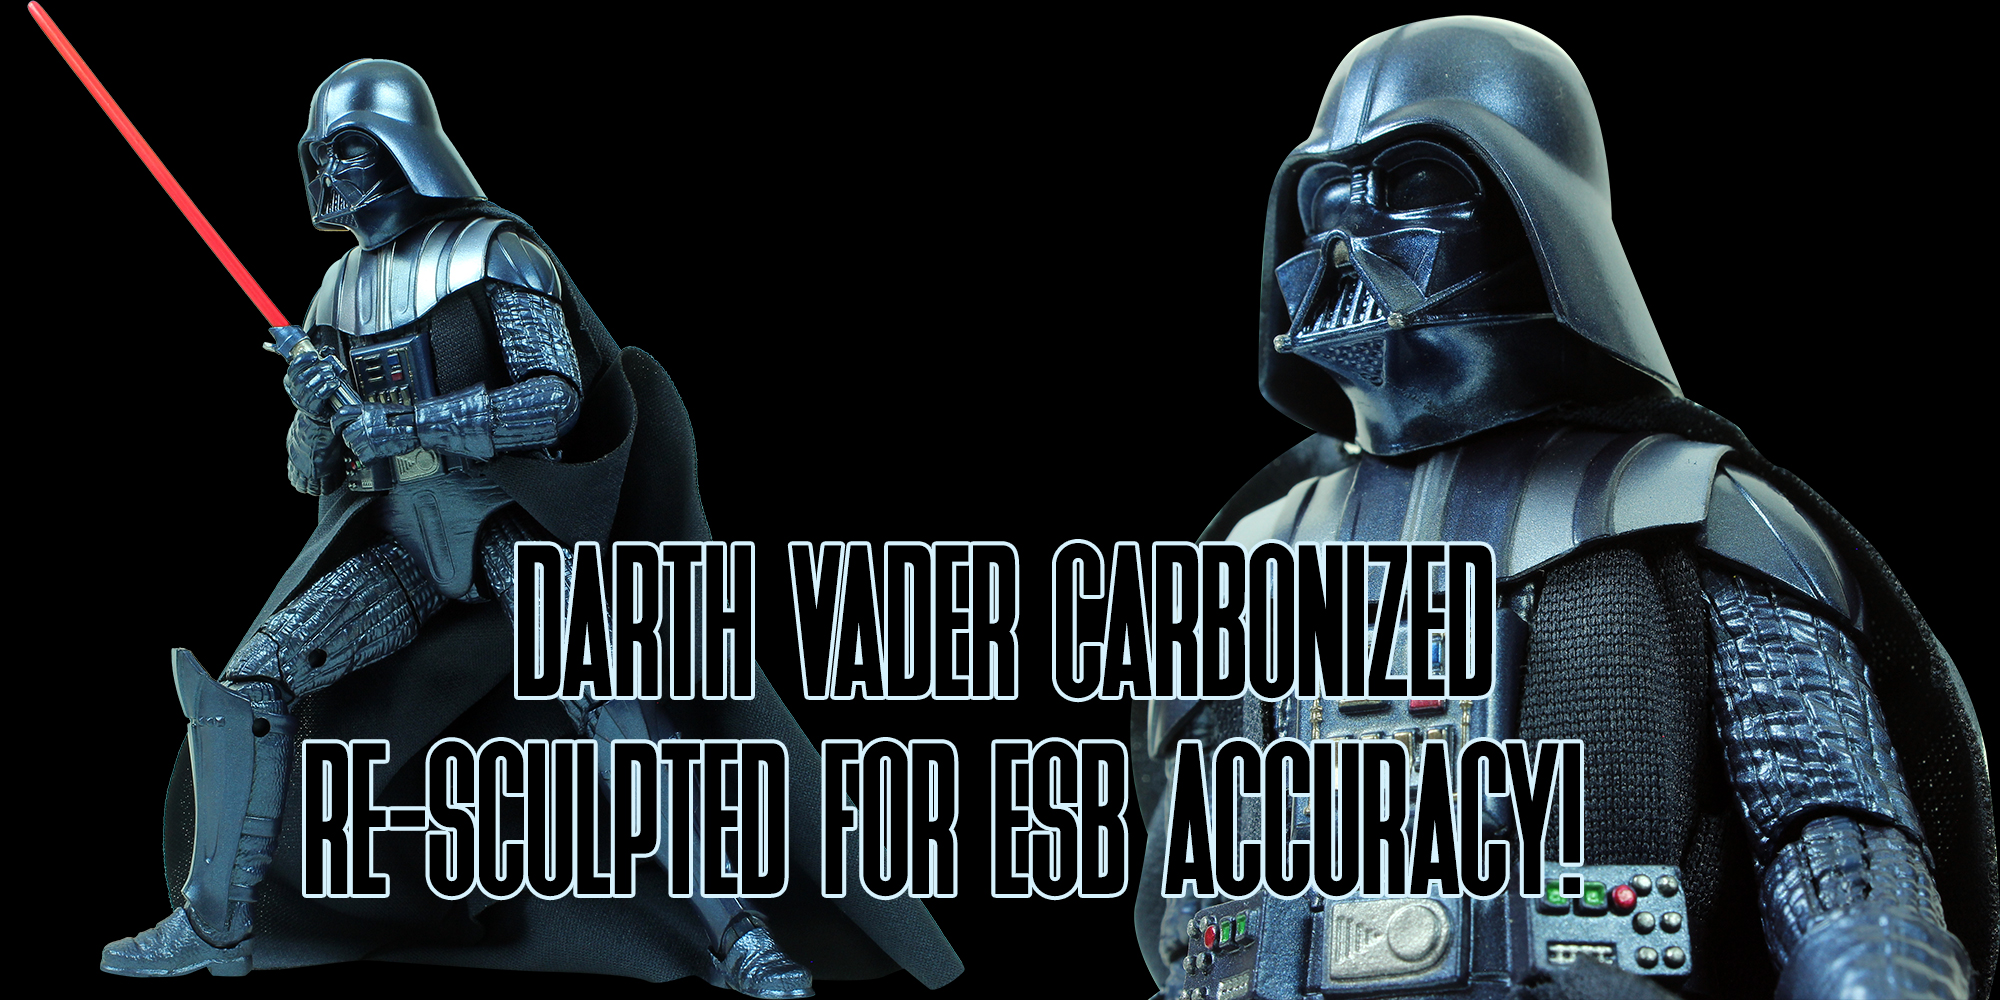 Darth Vader Carbonized Added!